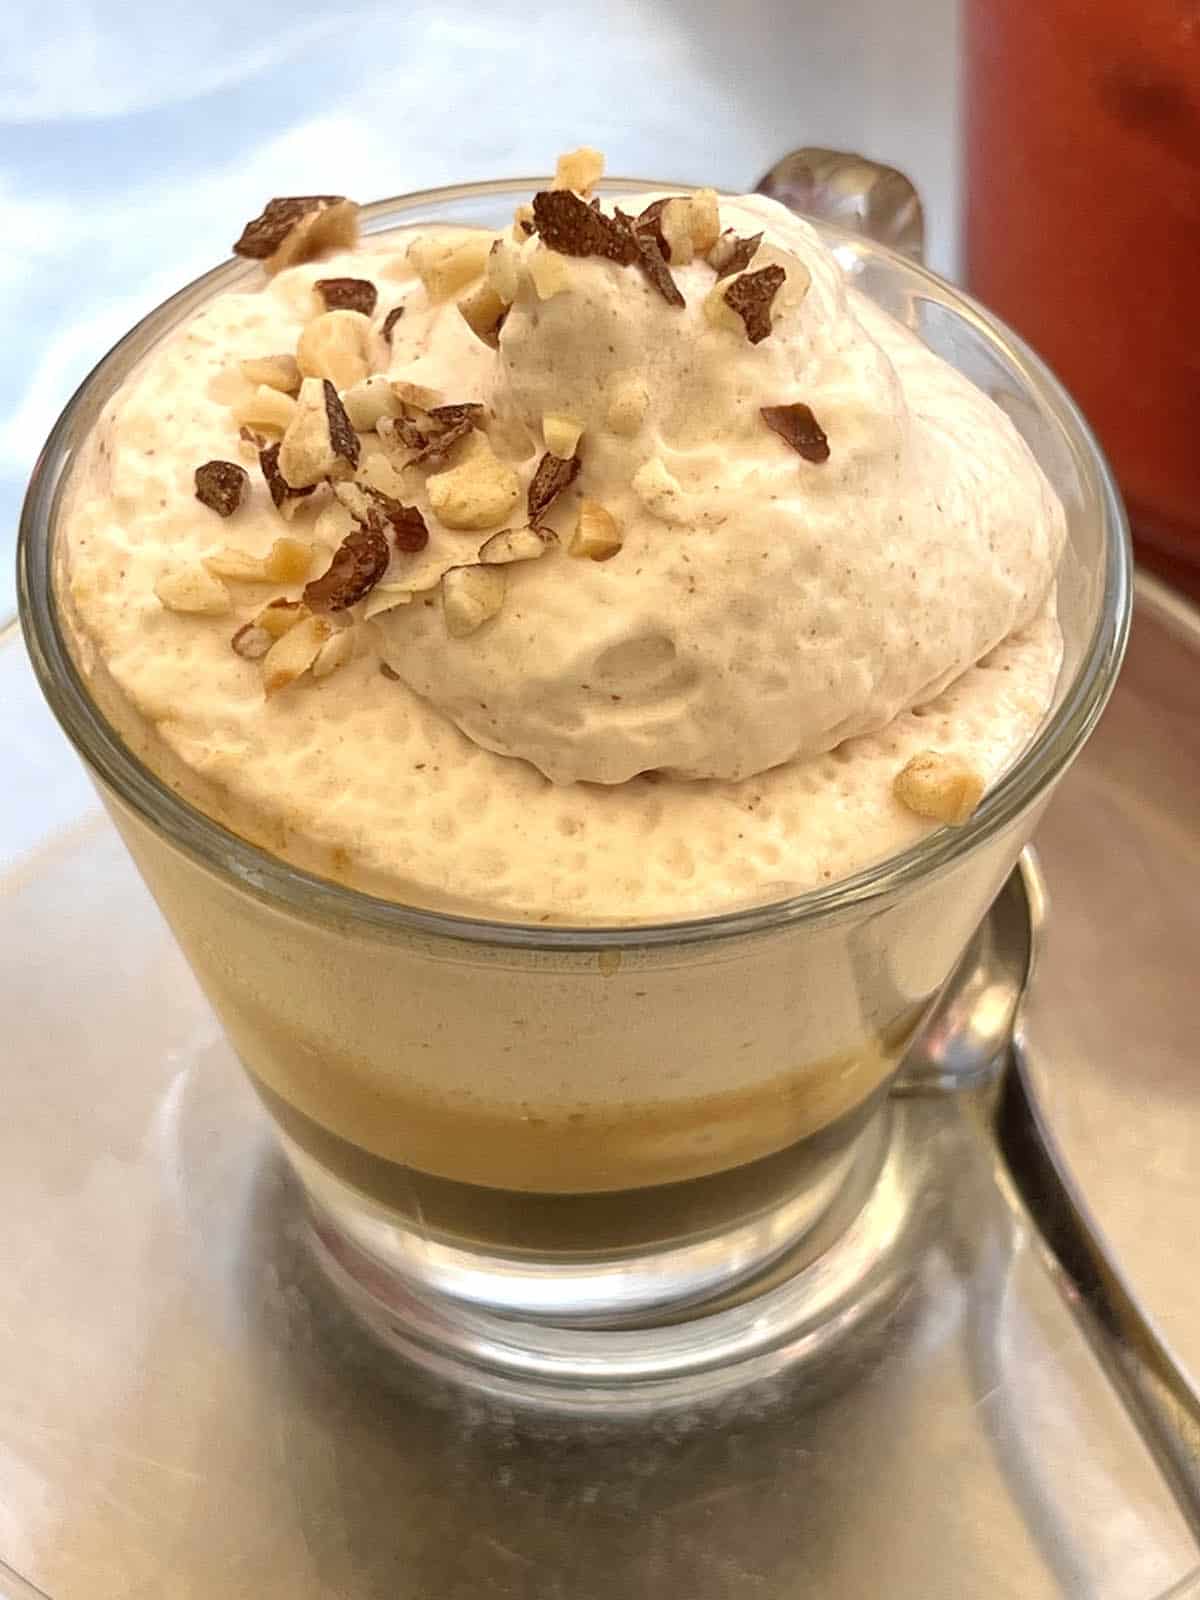 An almond foam coffee at Caffè Sicilia in Noto, Sicily